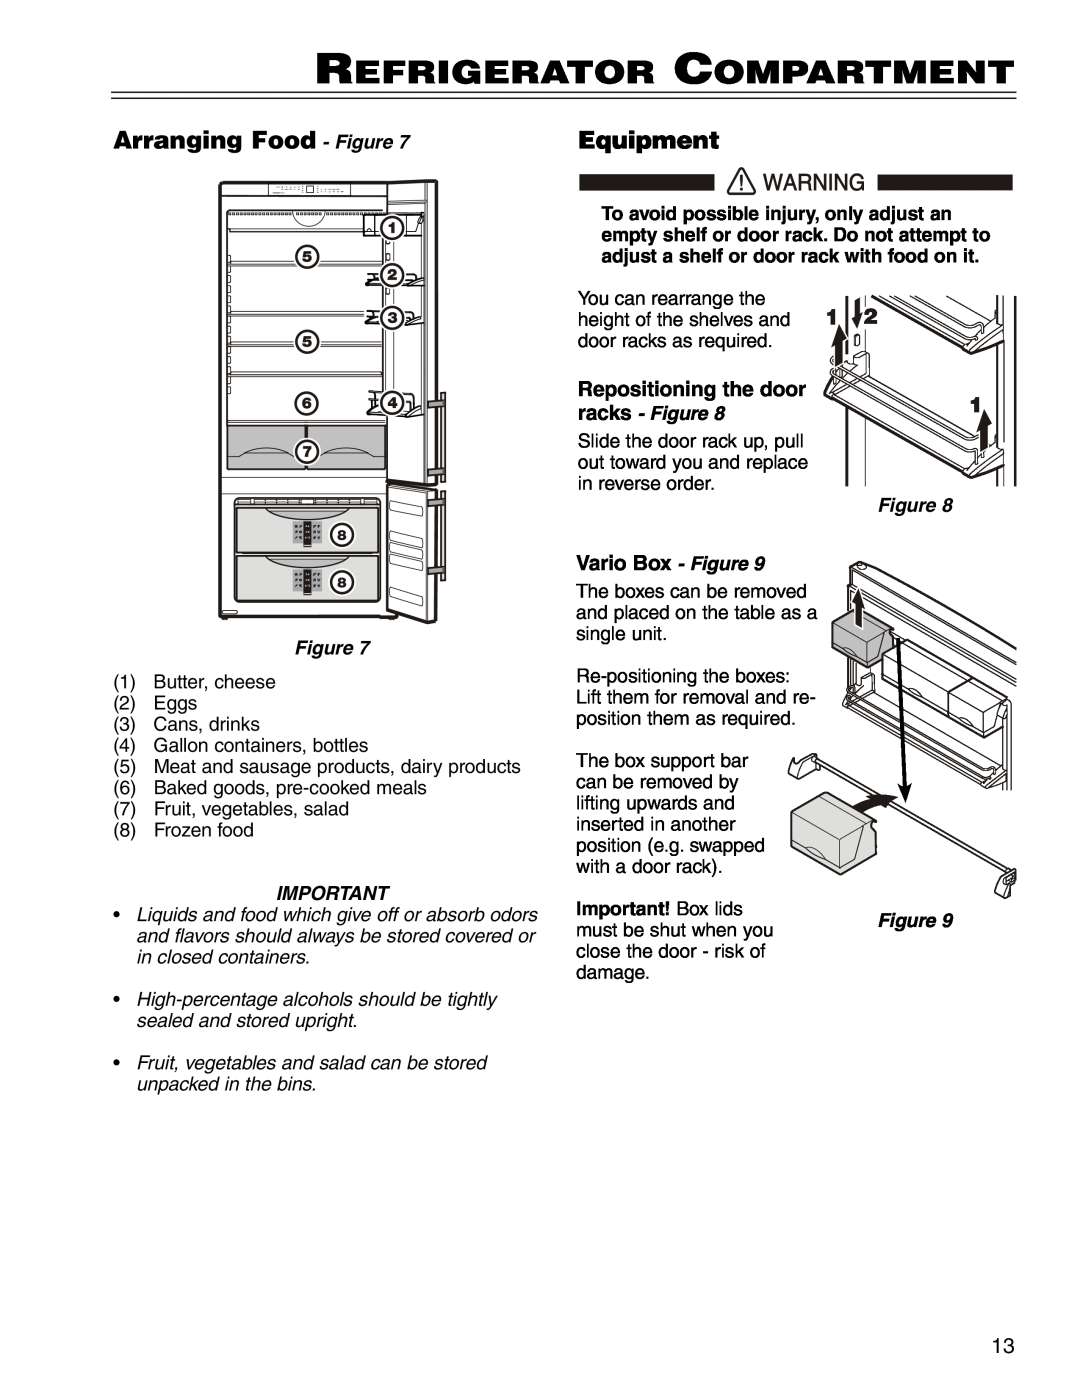 Liebherr CS 1400 7082 663-00 manual Refrigerator Compartment, Arranging Food - Figure, Equipment, Vario Box - Figure 